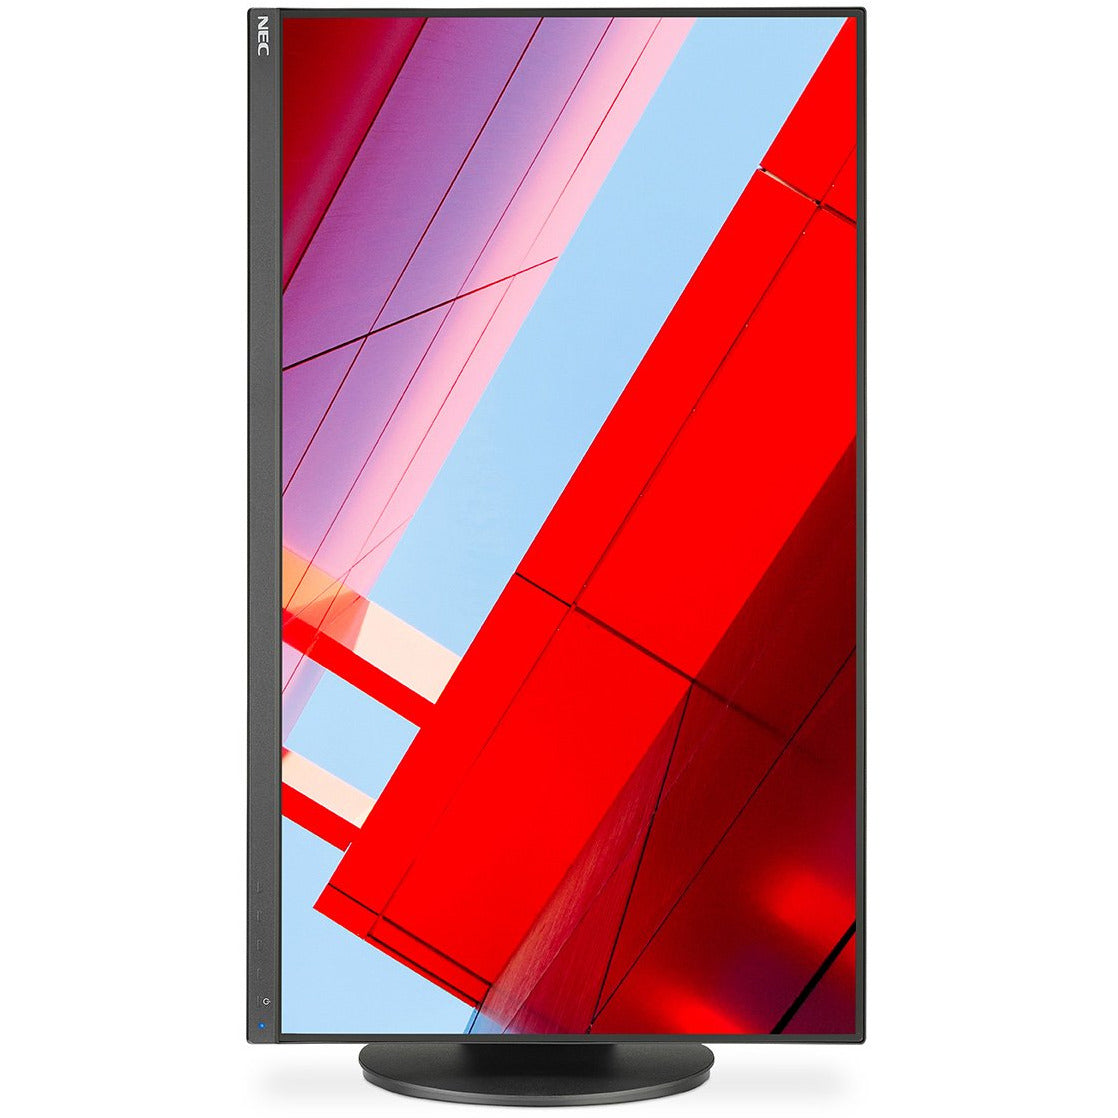 NEC MultiSync® E243F LCD 24" Enterprise Display